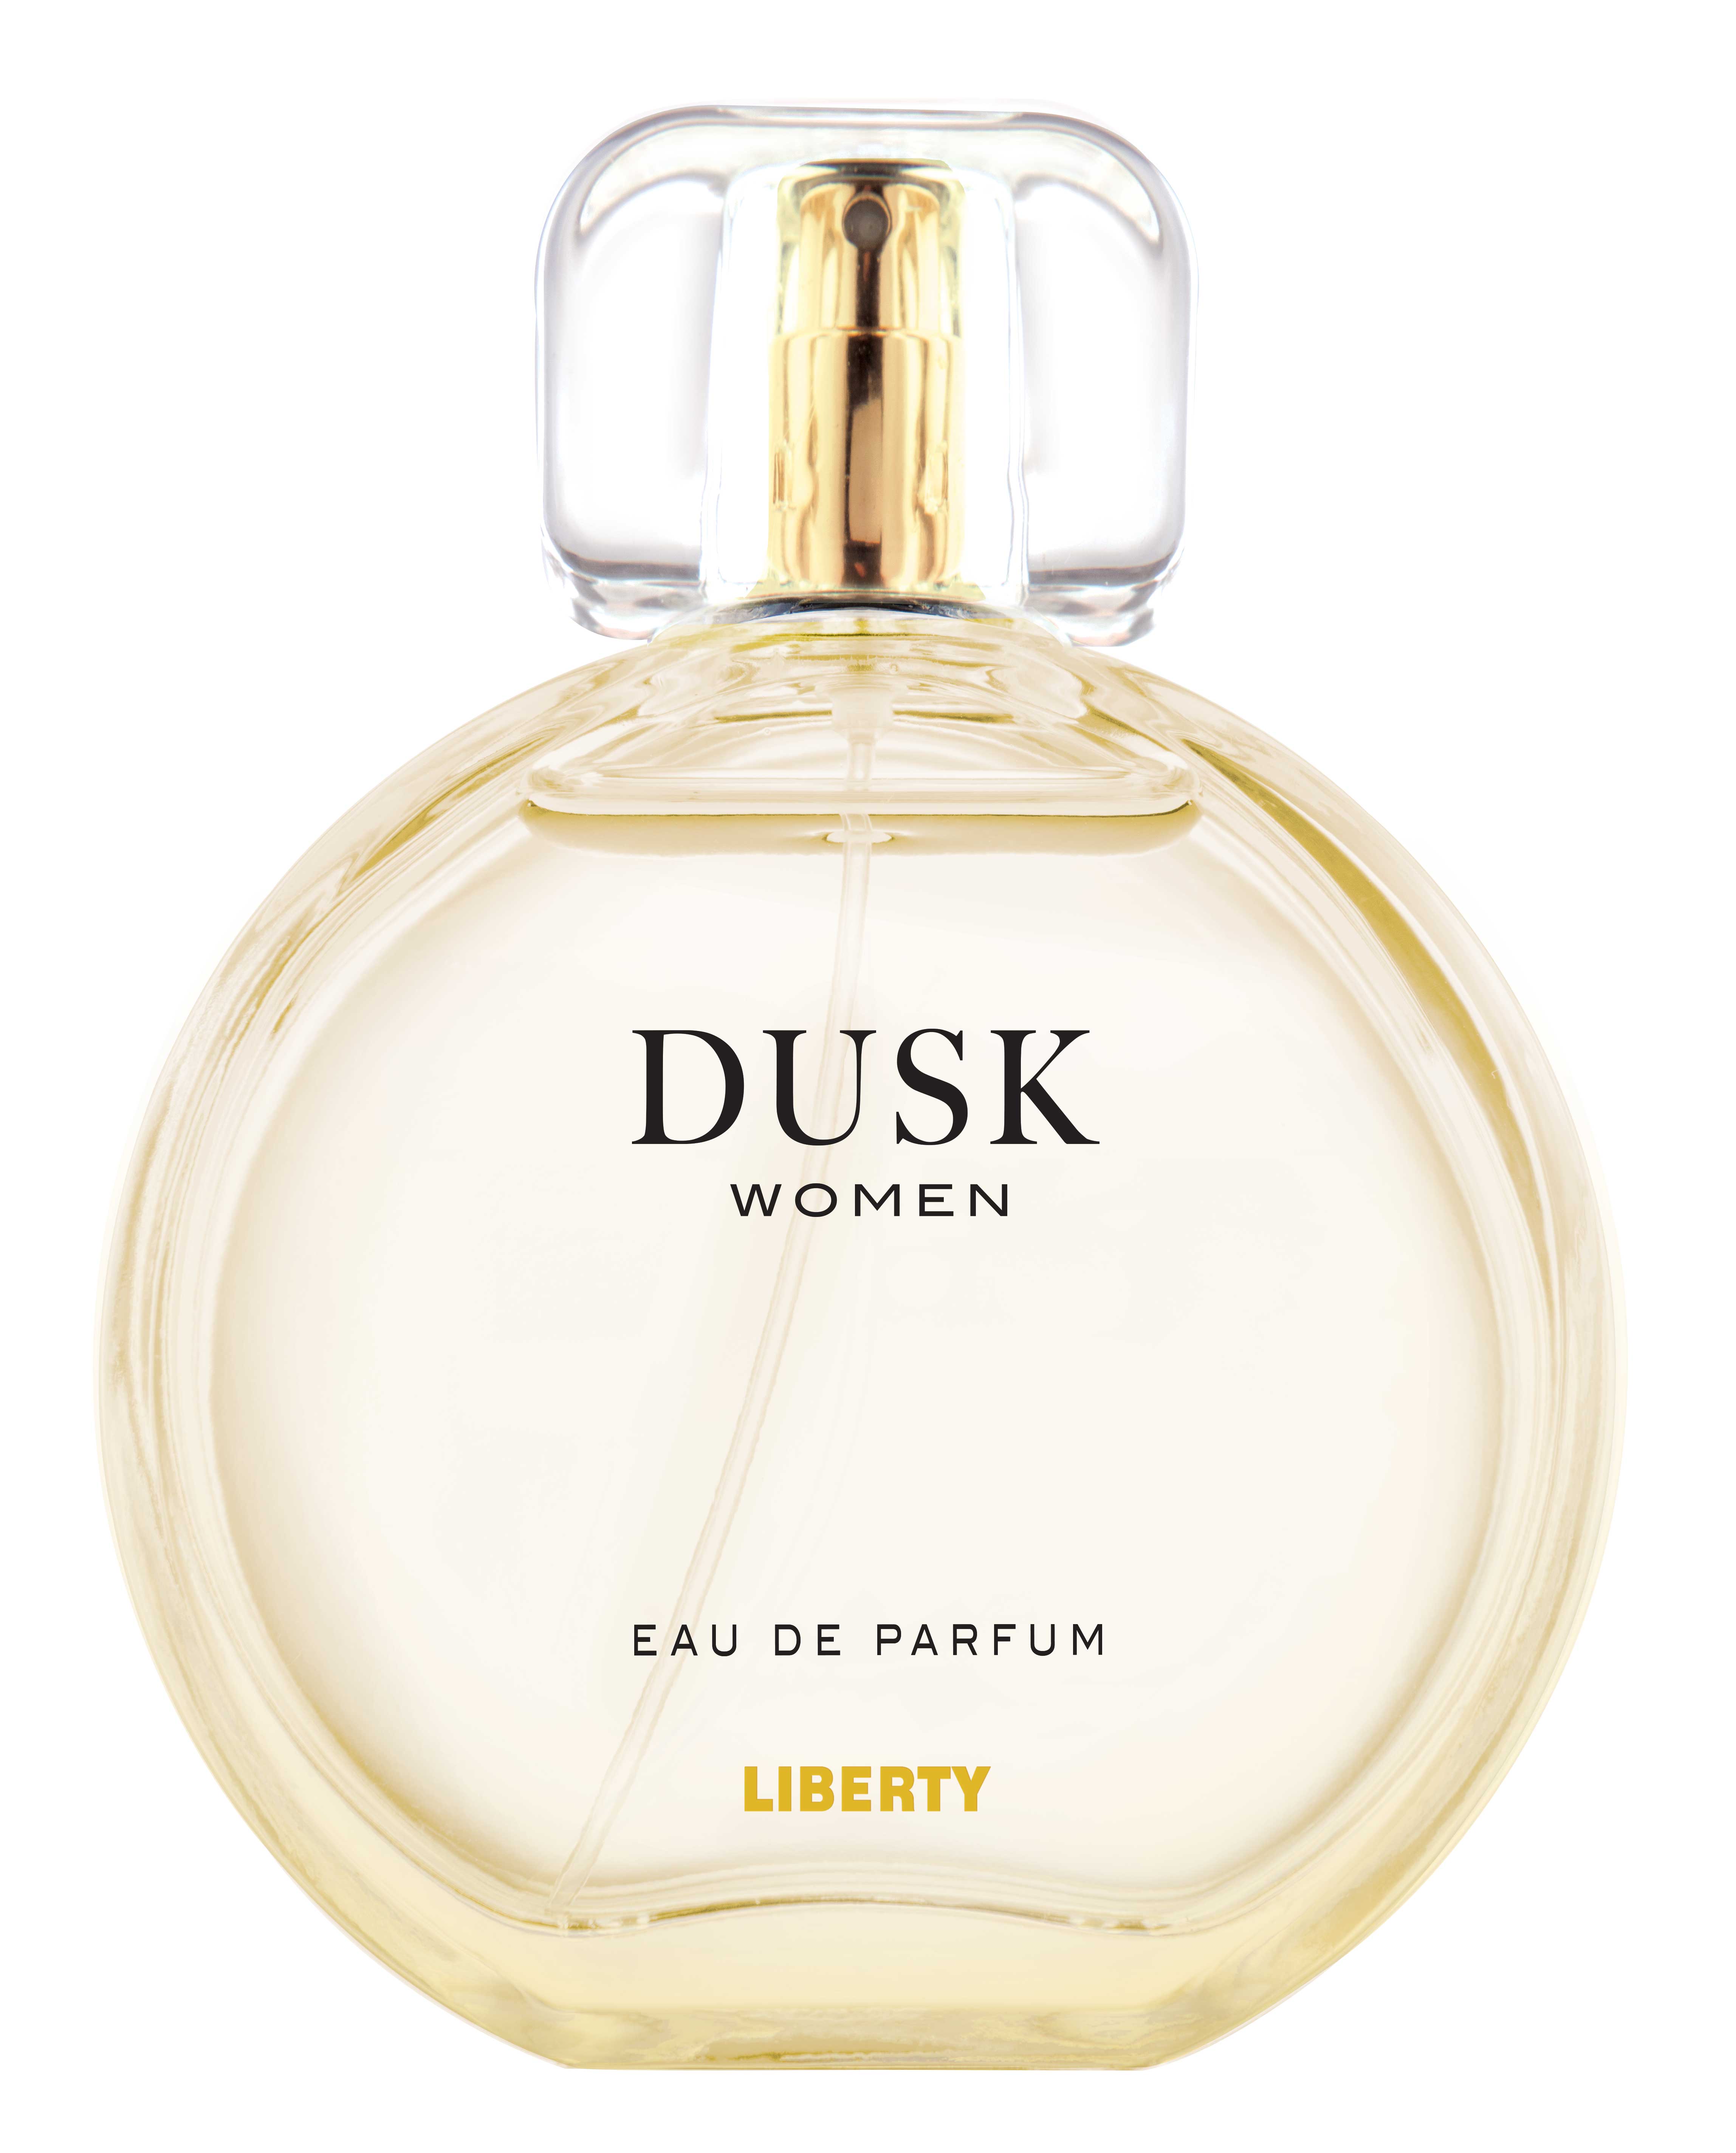 DUSK WOMEN - Eau De Perfume from LIBERTY LIFESTYLE